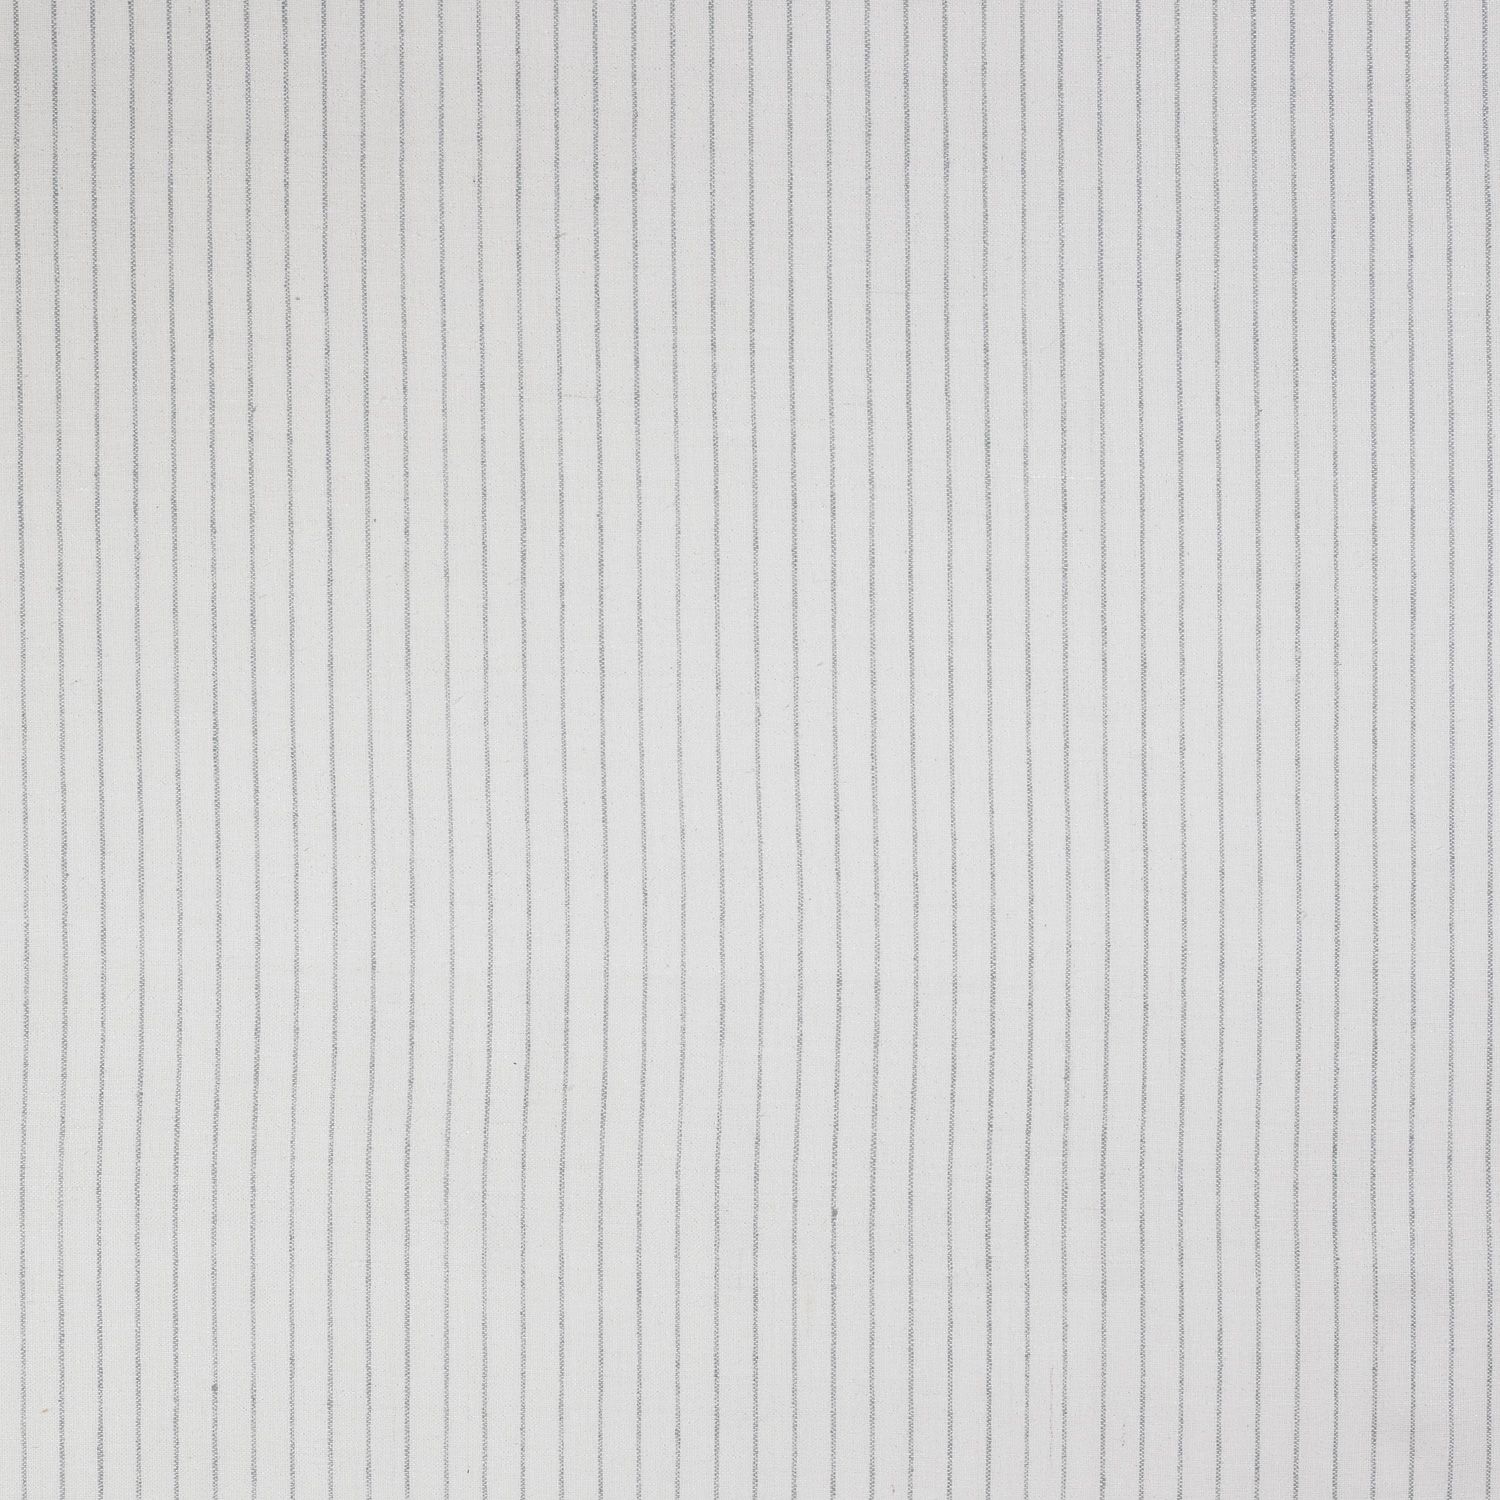 Gray Striped Wallpaper 17 - [1500x1500]